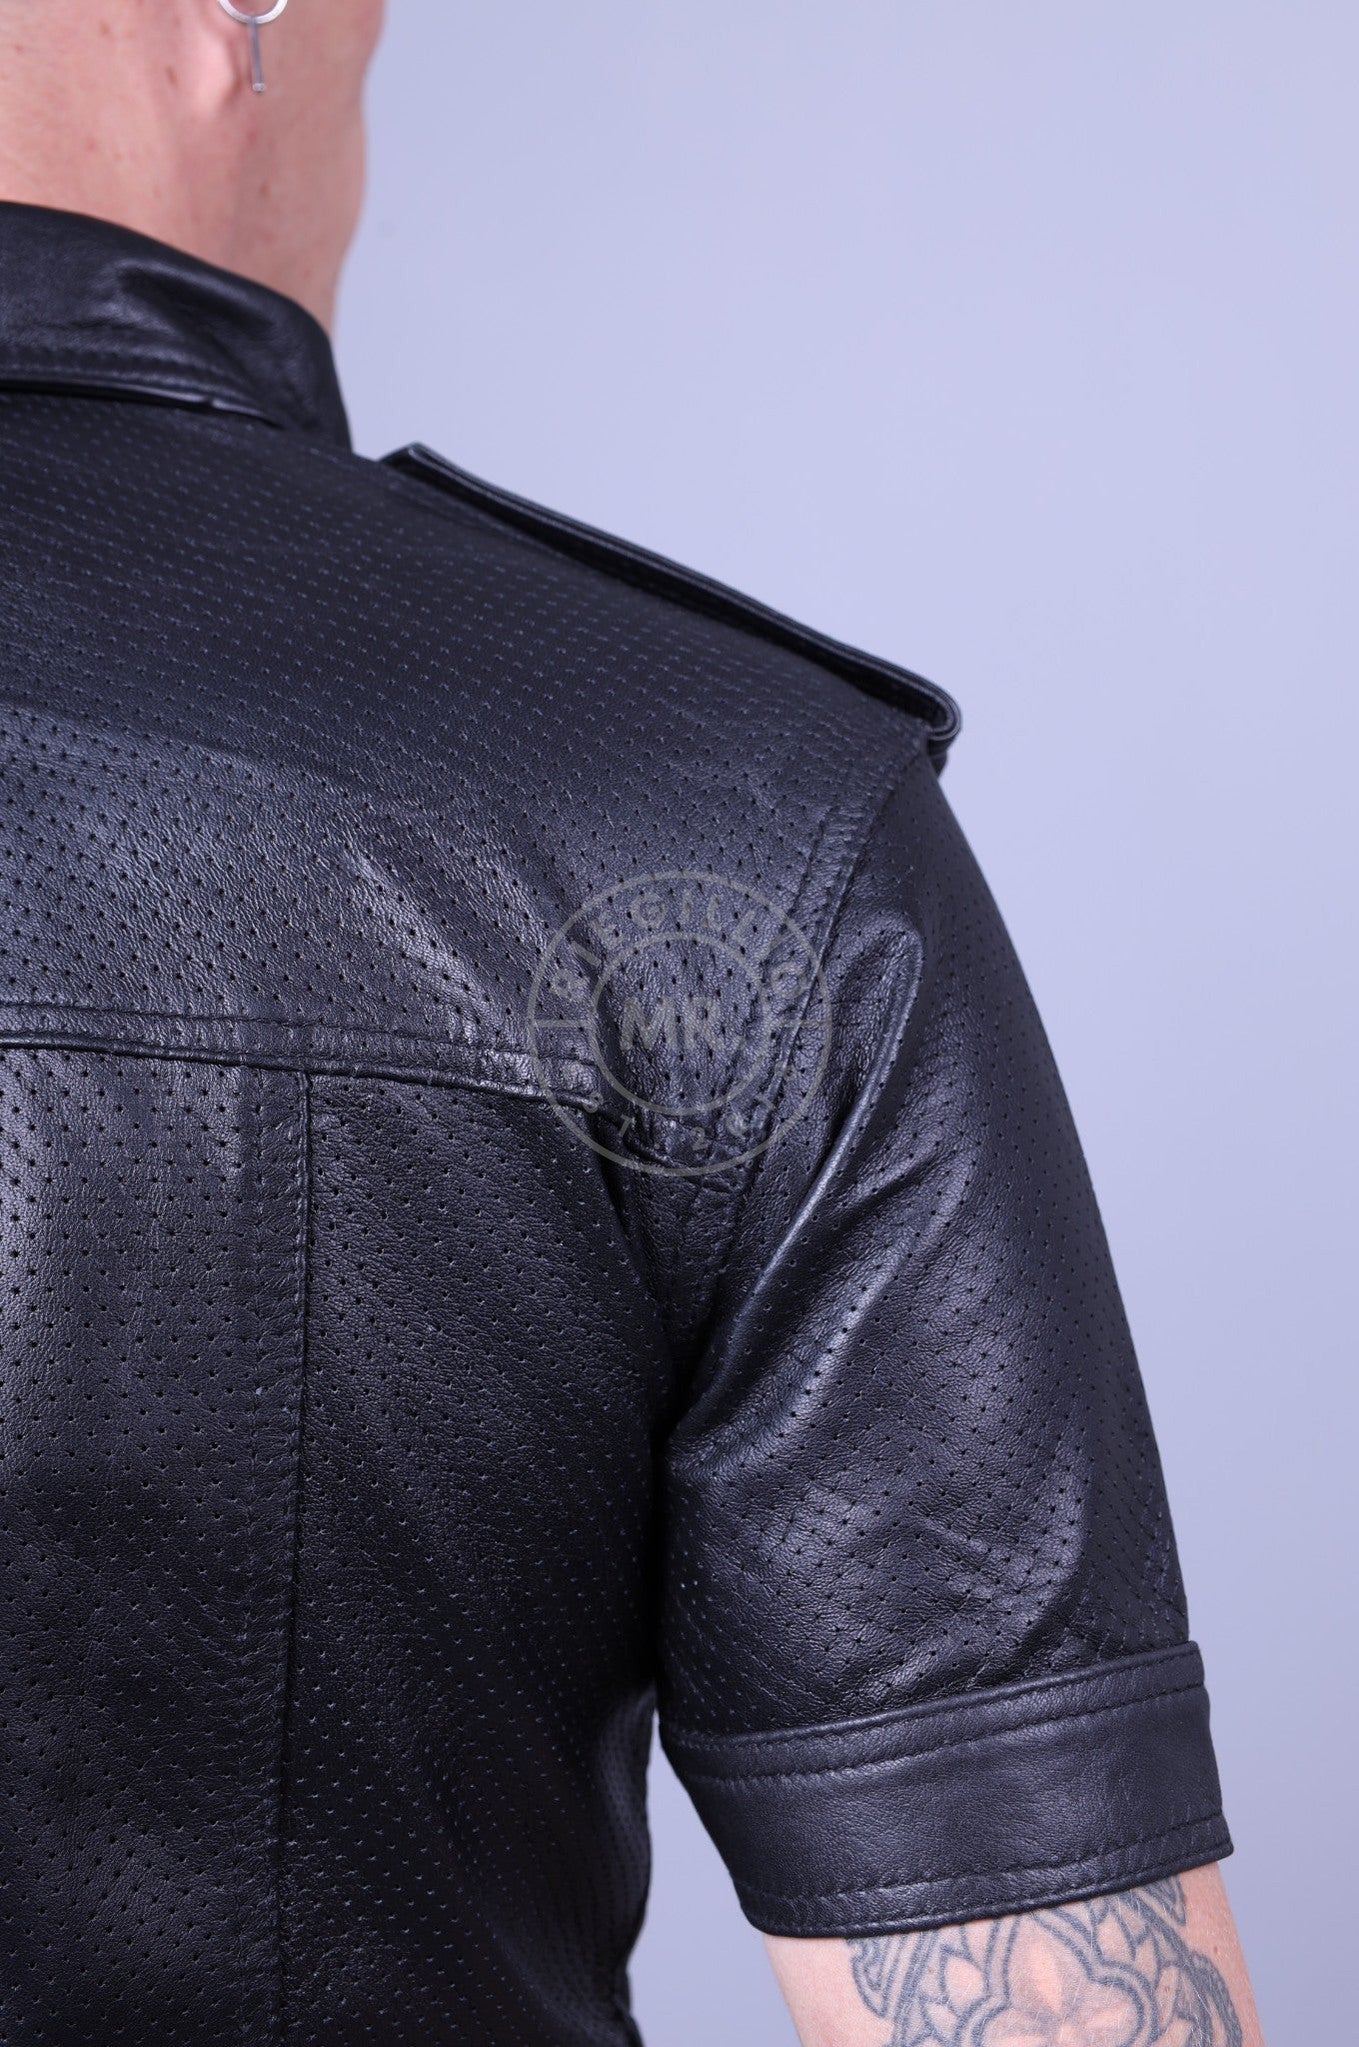 Black Leather Perforated Shirt-at MR. Riegillio